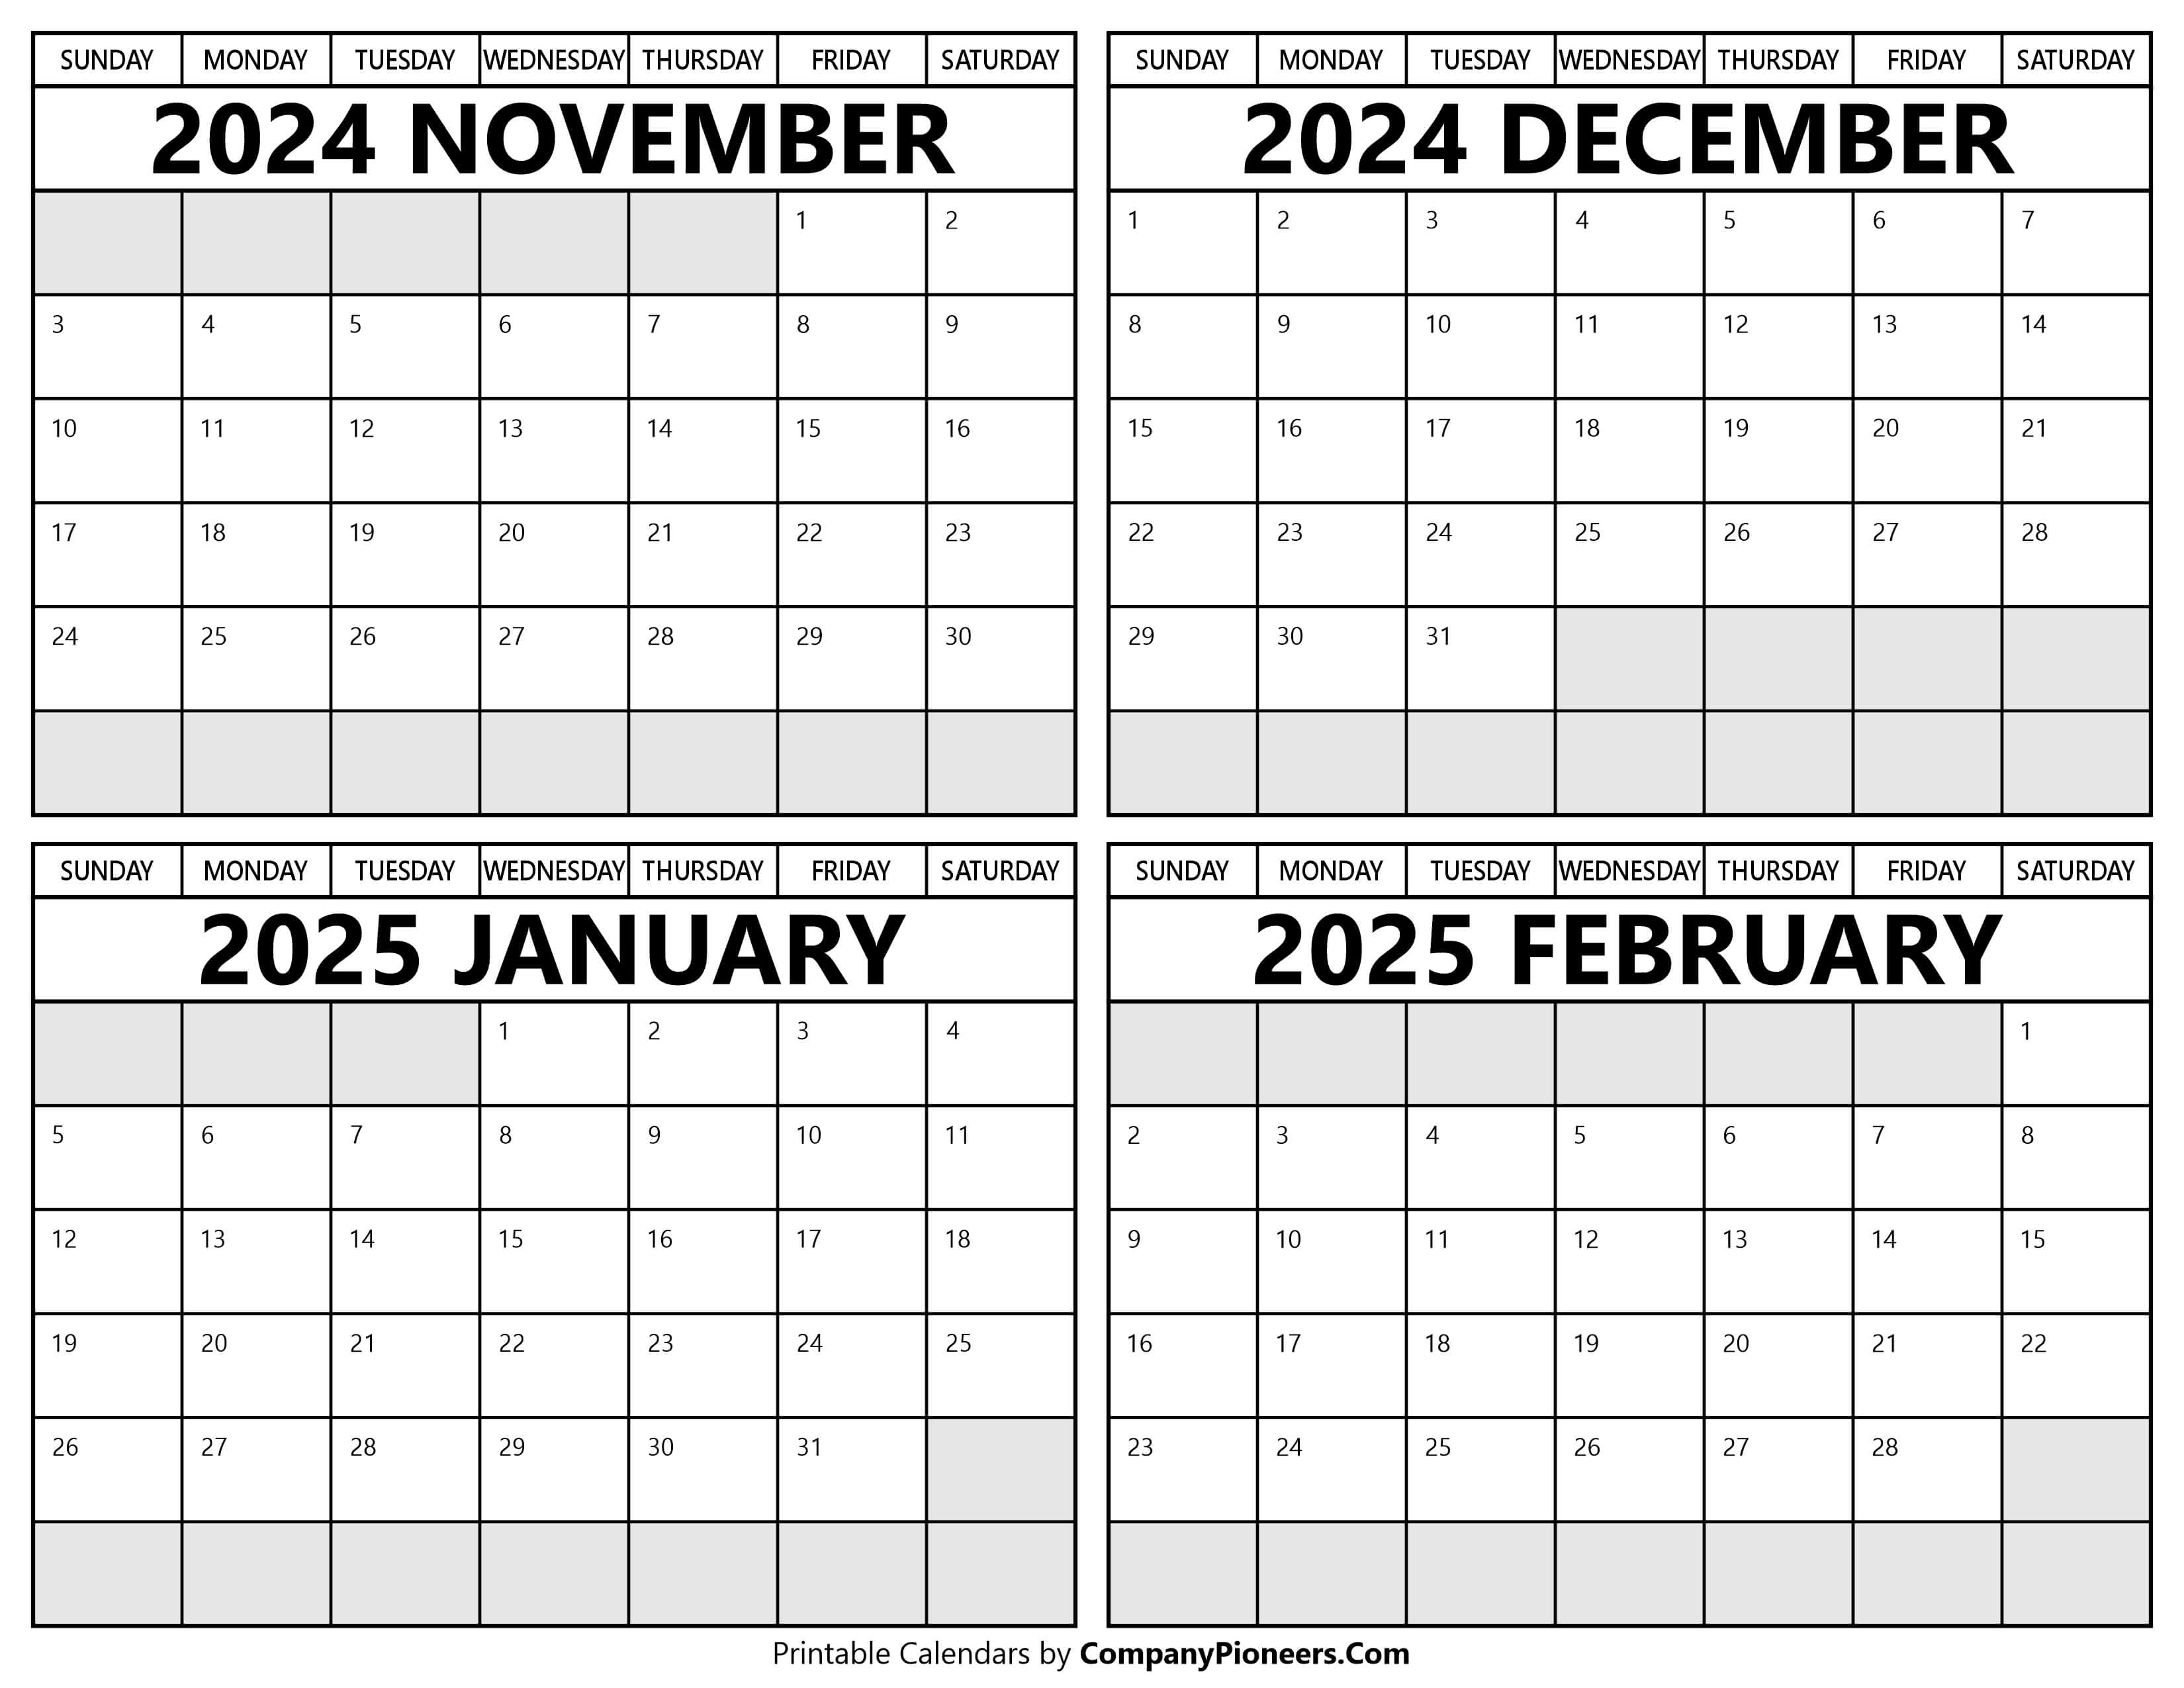 Printable November 2024 to February 2025 Calendars